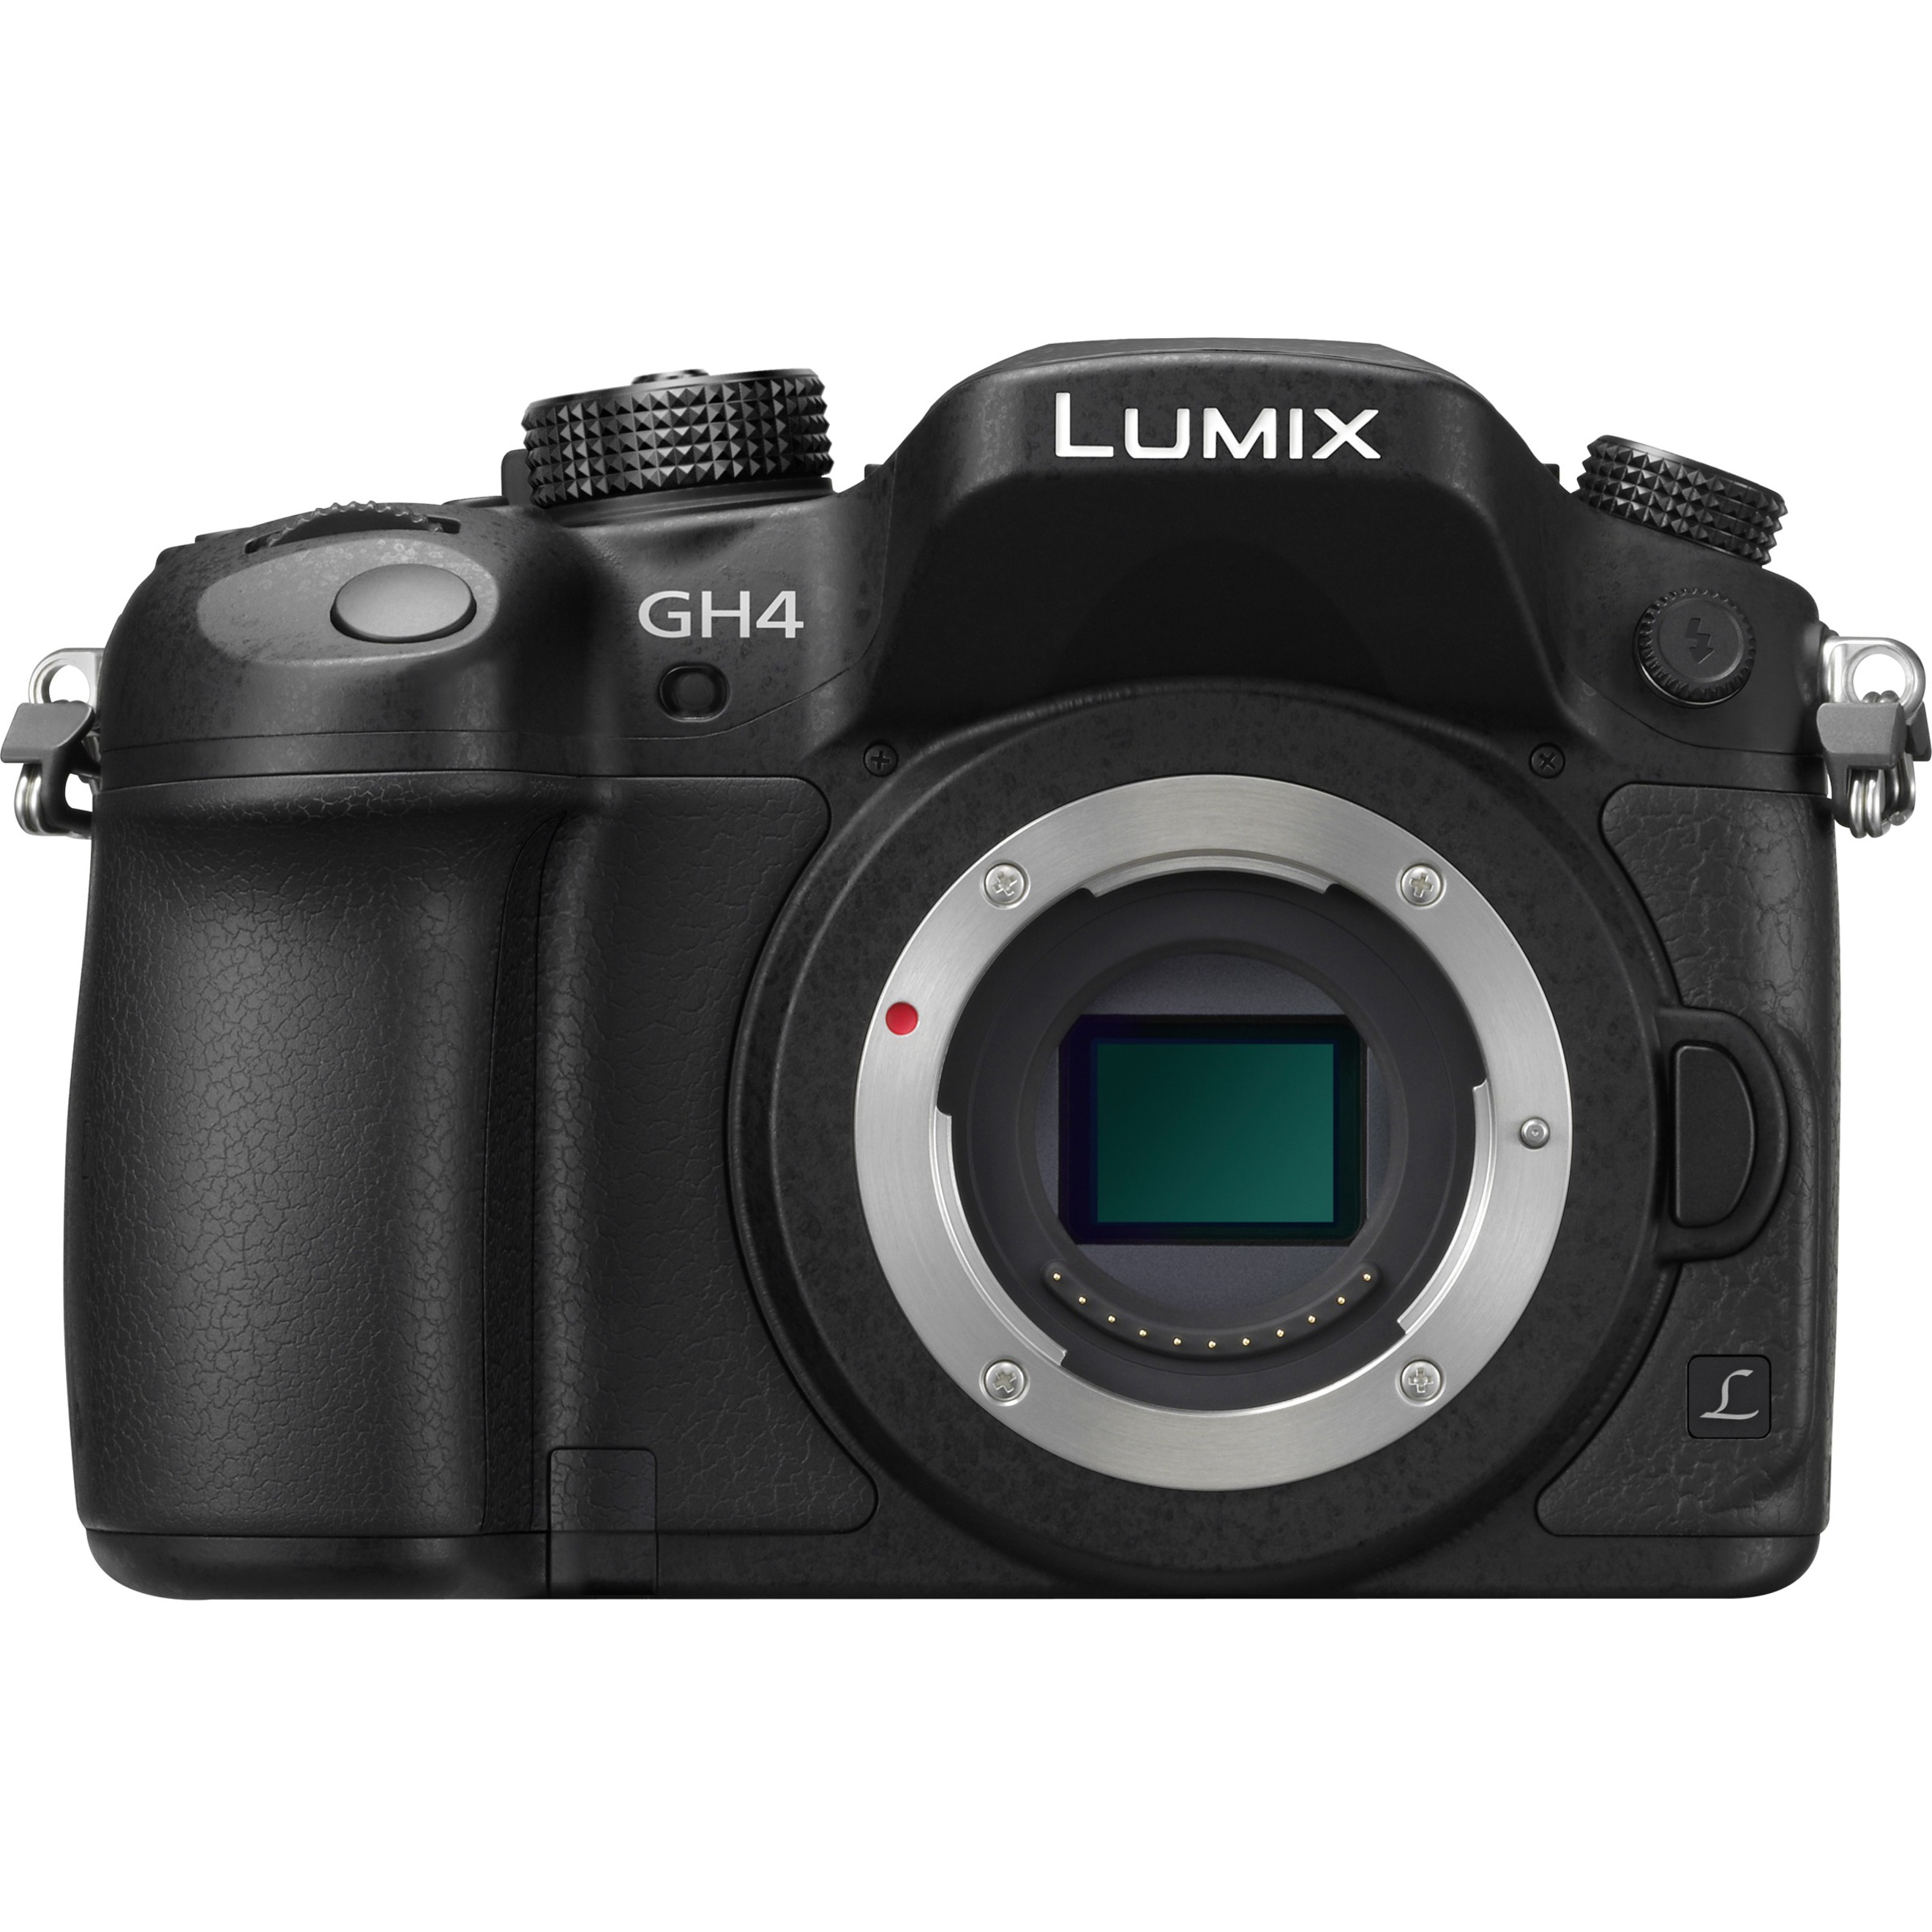 Panasonic Lumix DMC-GH4 16.1 Megapixel Mirrorless Camera with Lens, Black - image 5 of 7